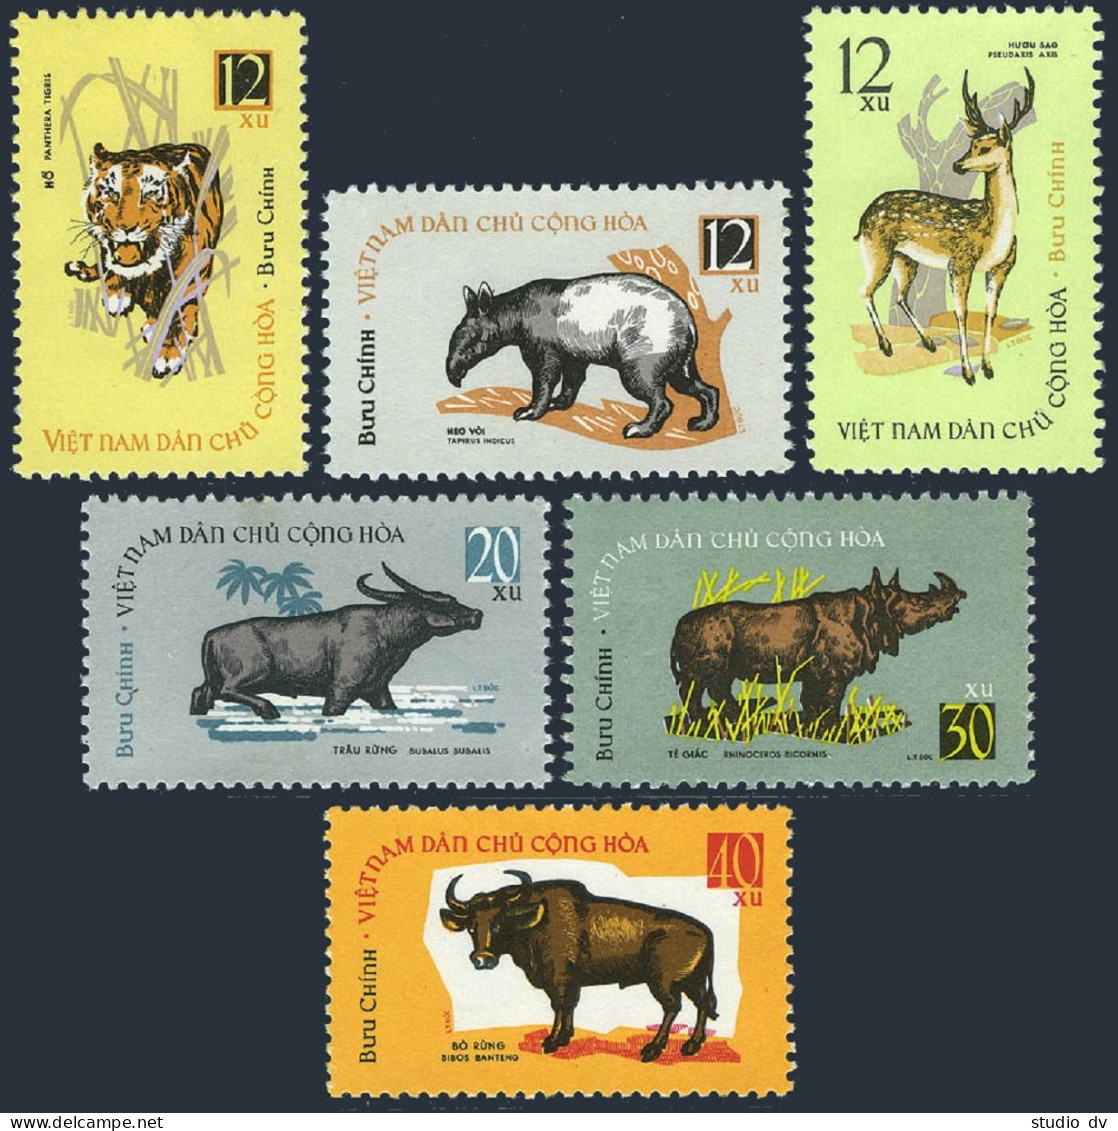 Viet Nam 309-314, MNH. Michel 319-324. Wild Animals 1964. - Viêt-Nam